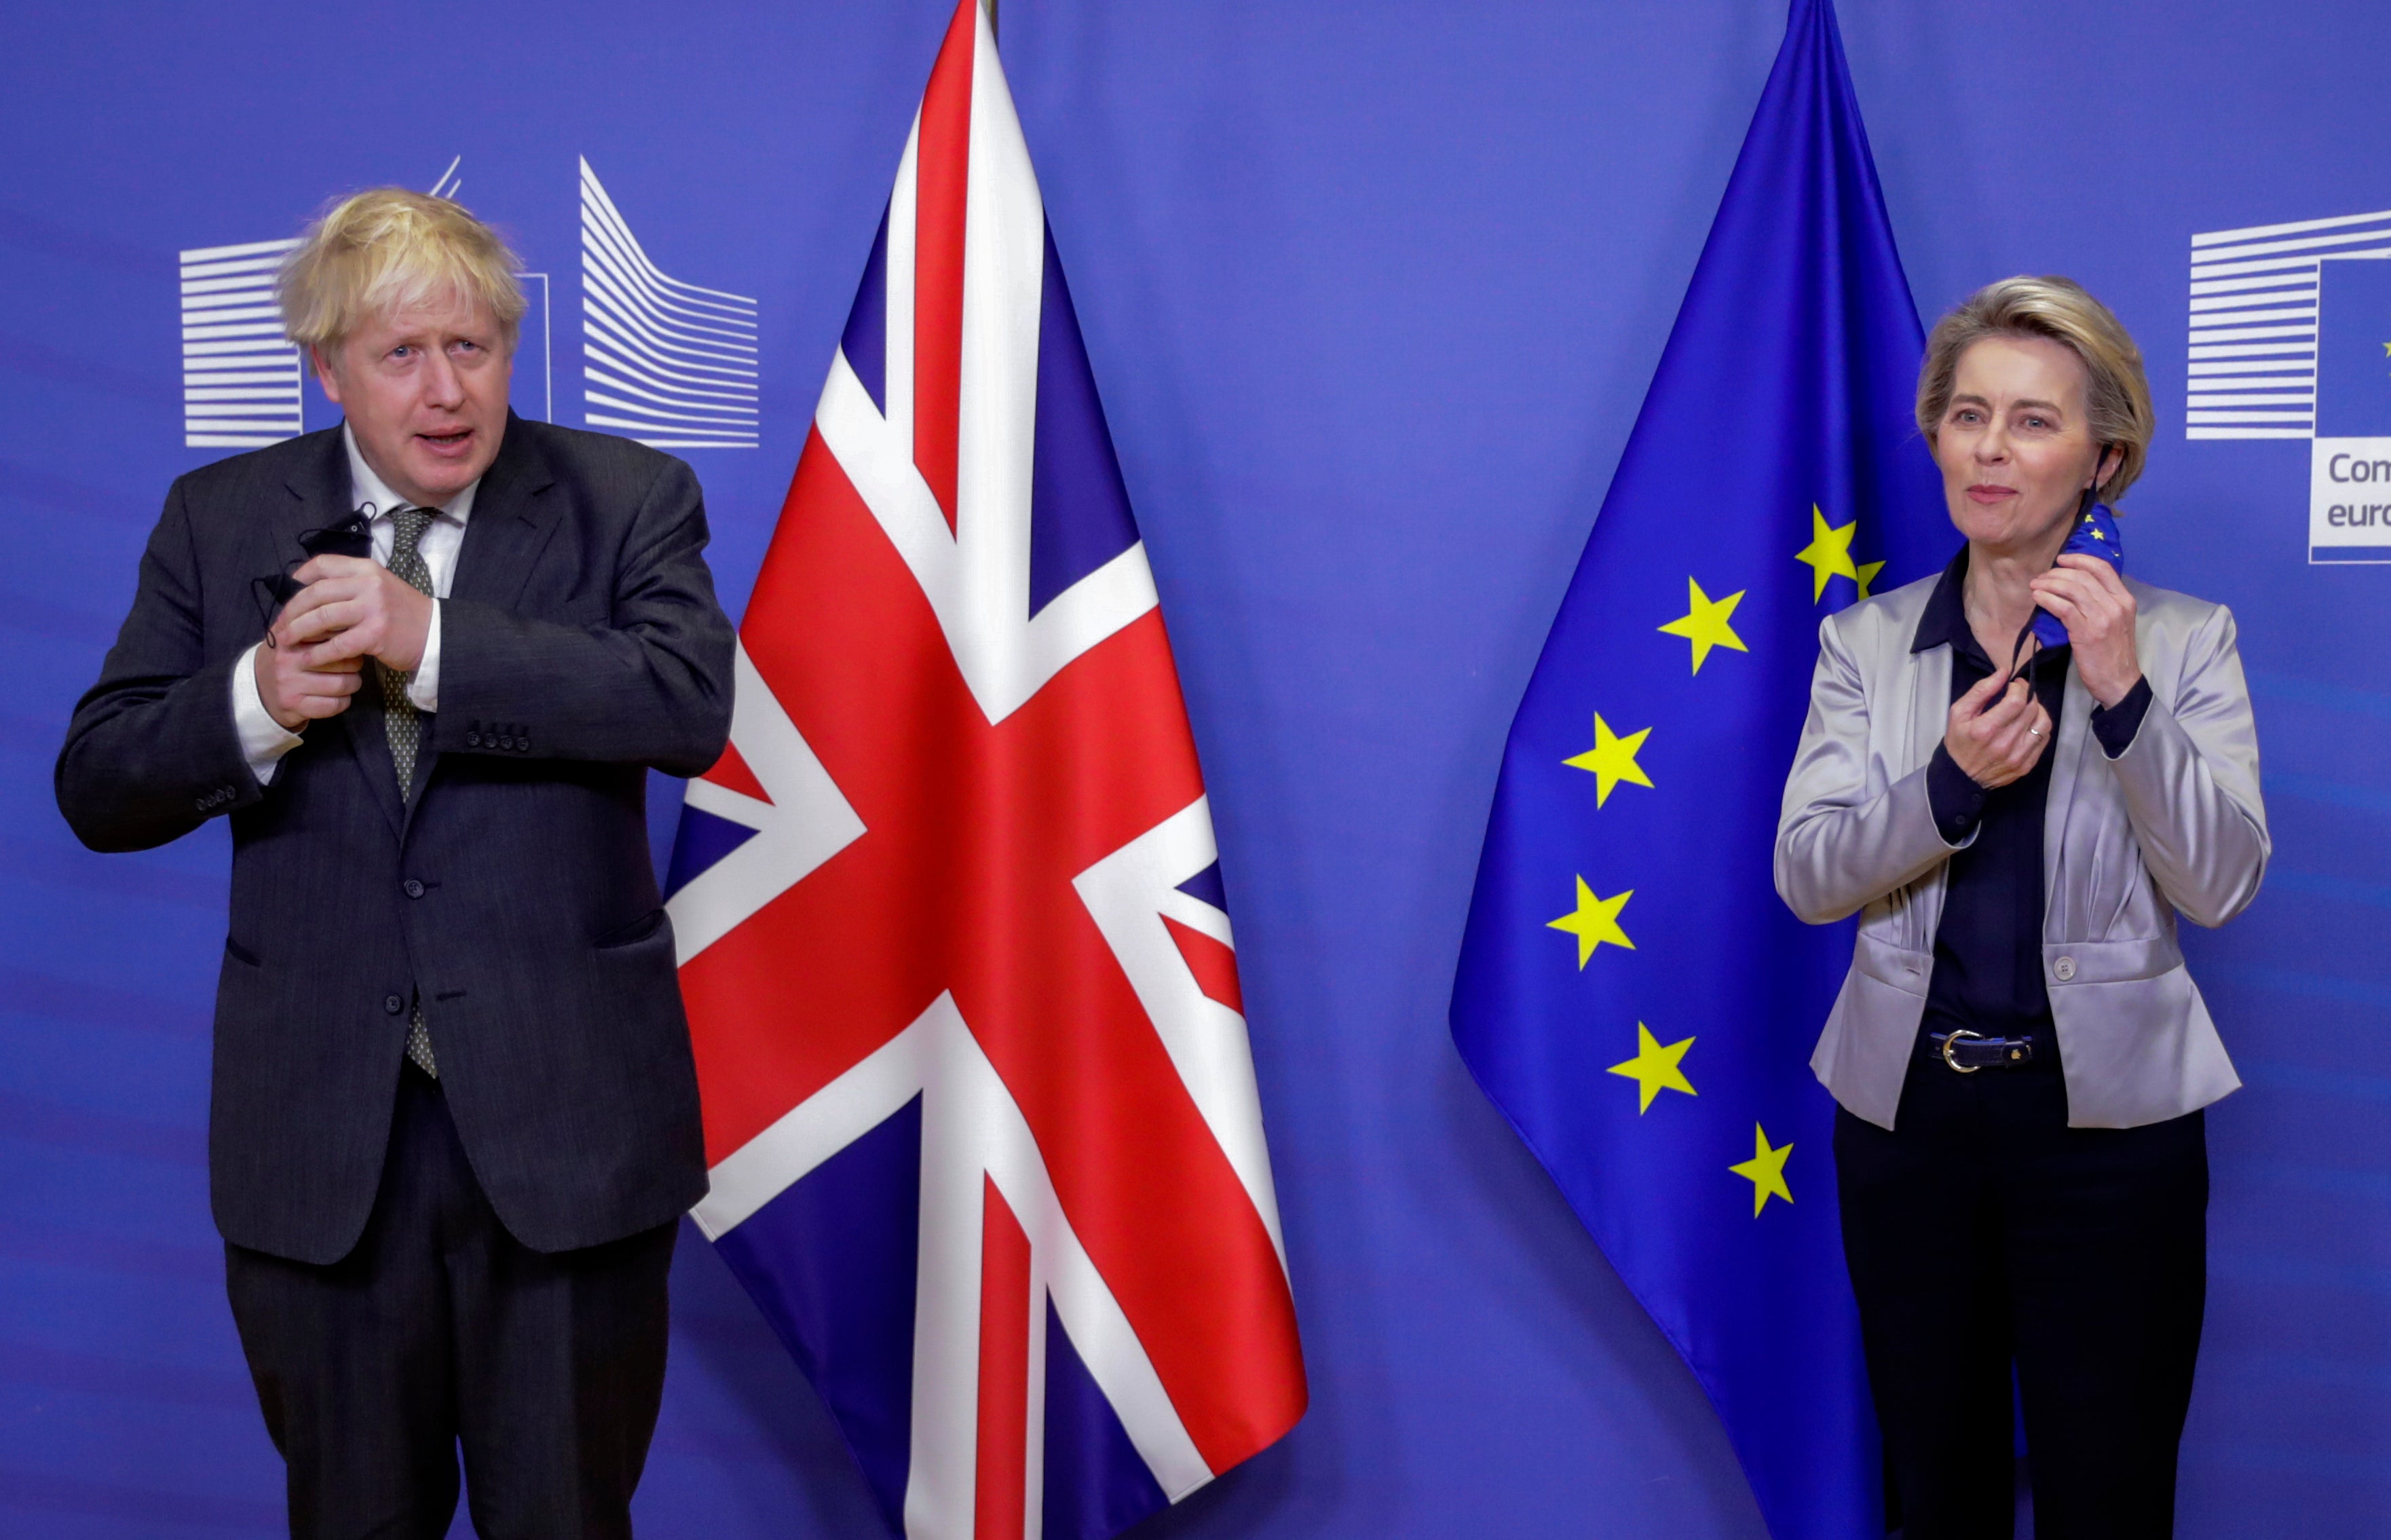 Ursula von der Leyen, the EU commission president, welcomes Boris Johnson to Brussels for trade talks